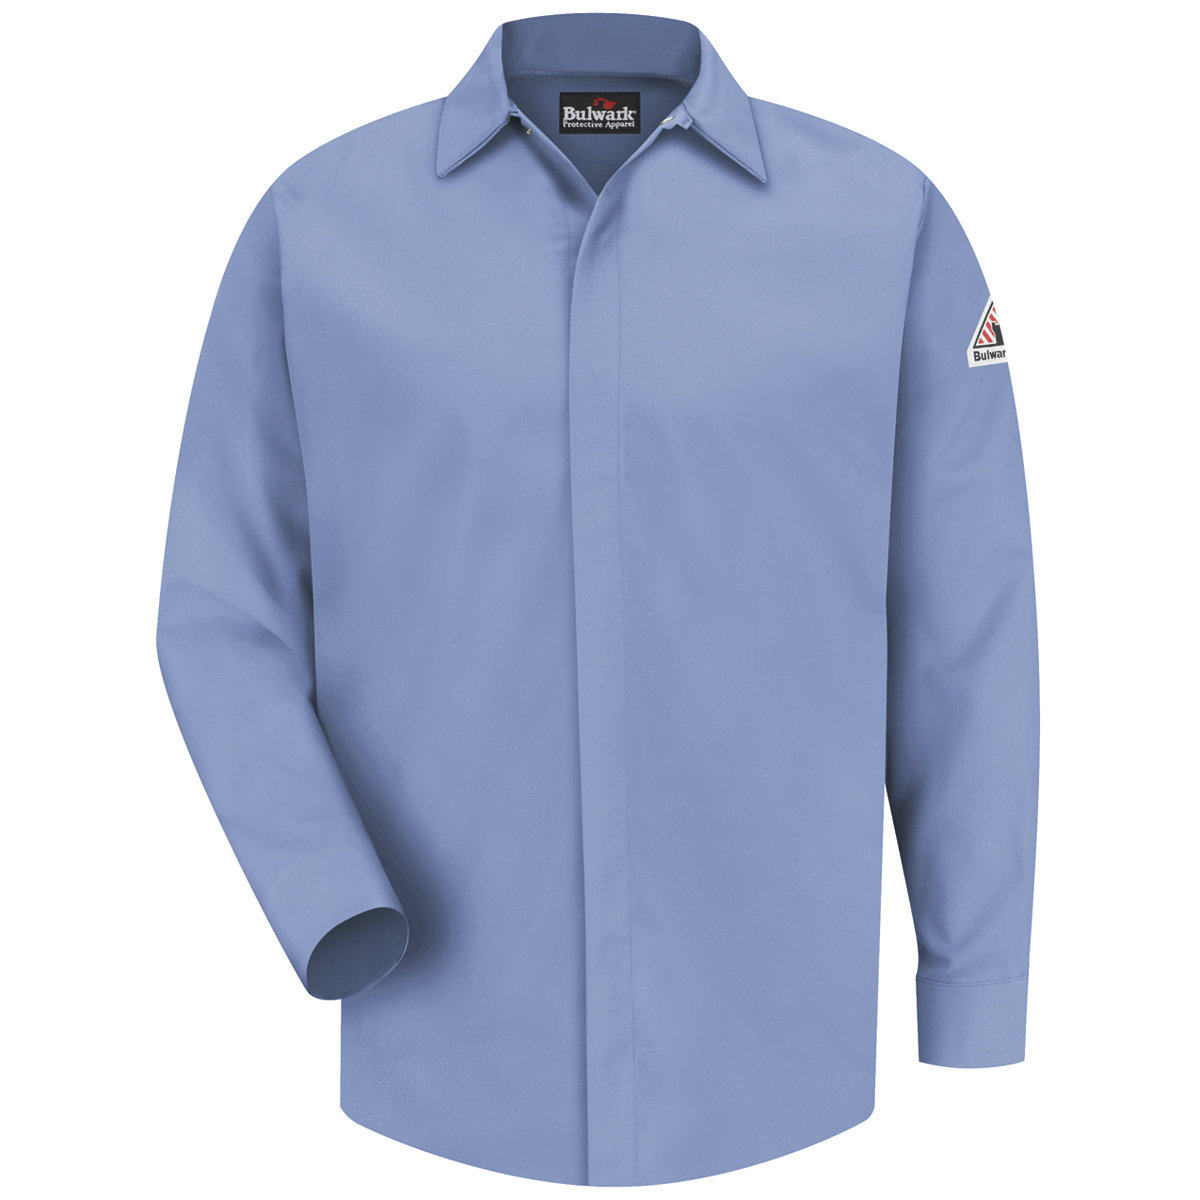 Bulwark® Large Regular Light Blue Westex Ultrasoft®/Cotton/Nylon Flame Resistant Work Shirt With Gripper Front Closure